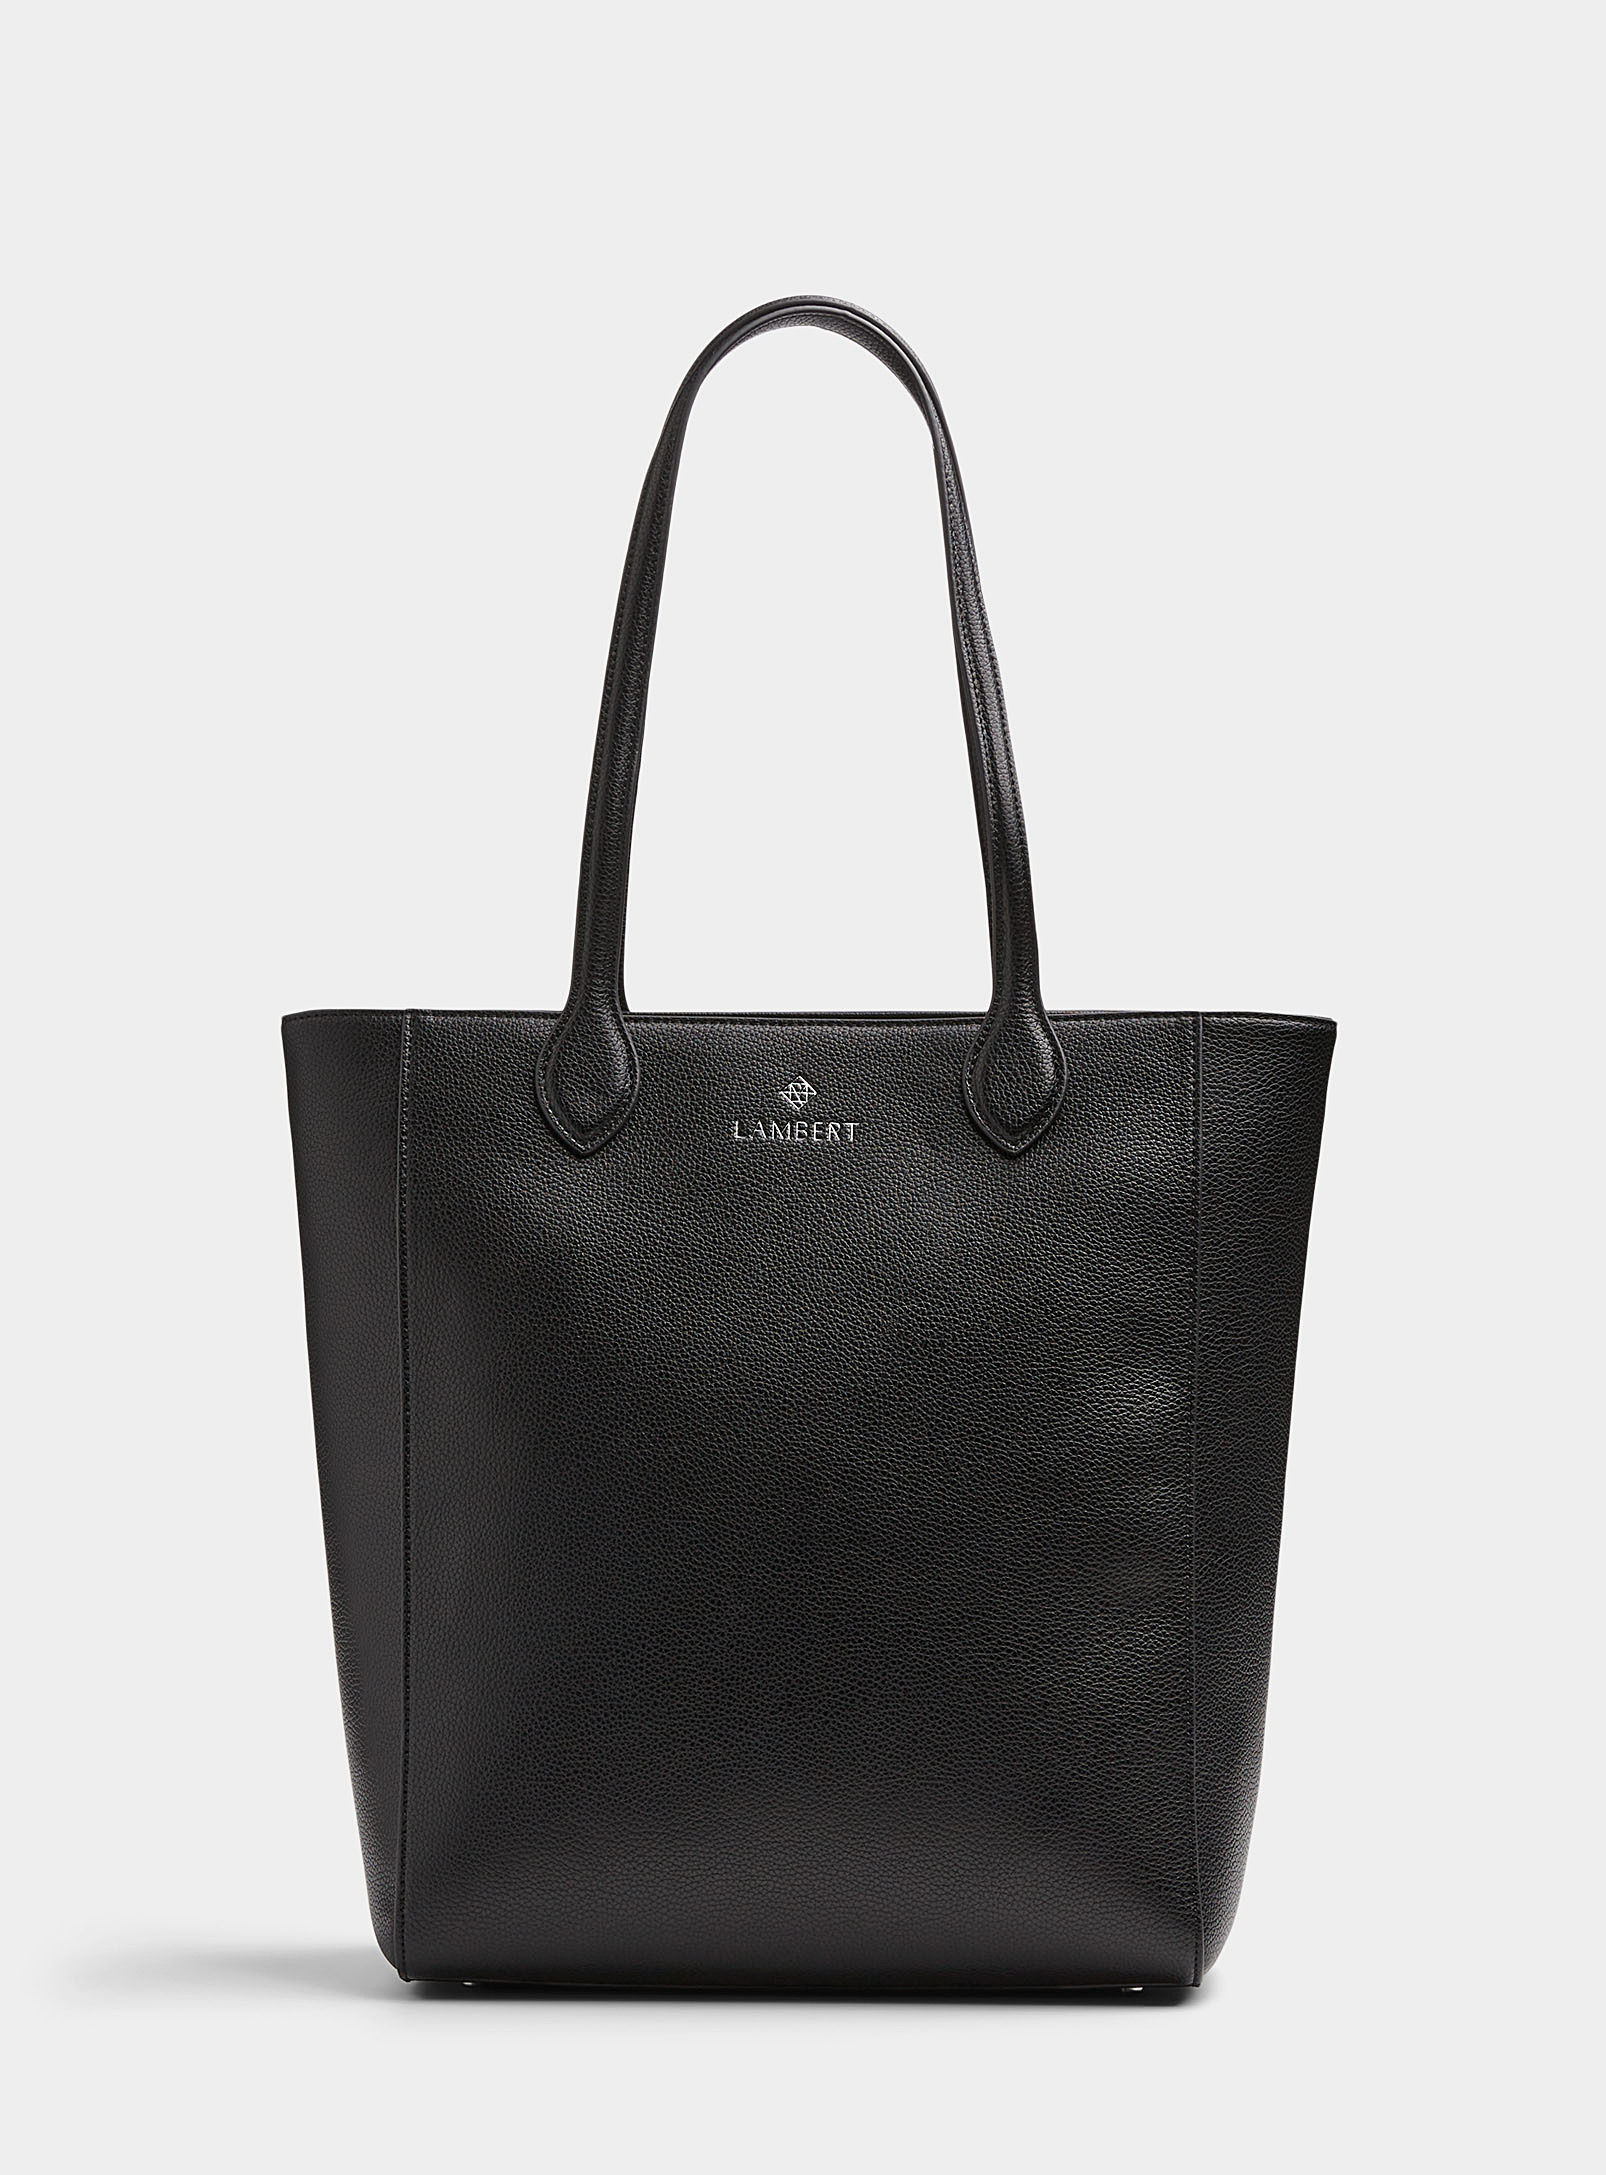 Lambert - Women's Claire minimalist Tote Bag